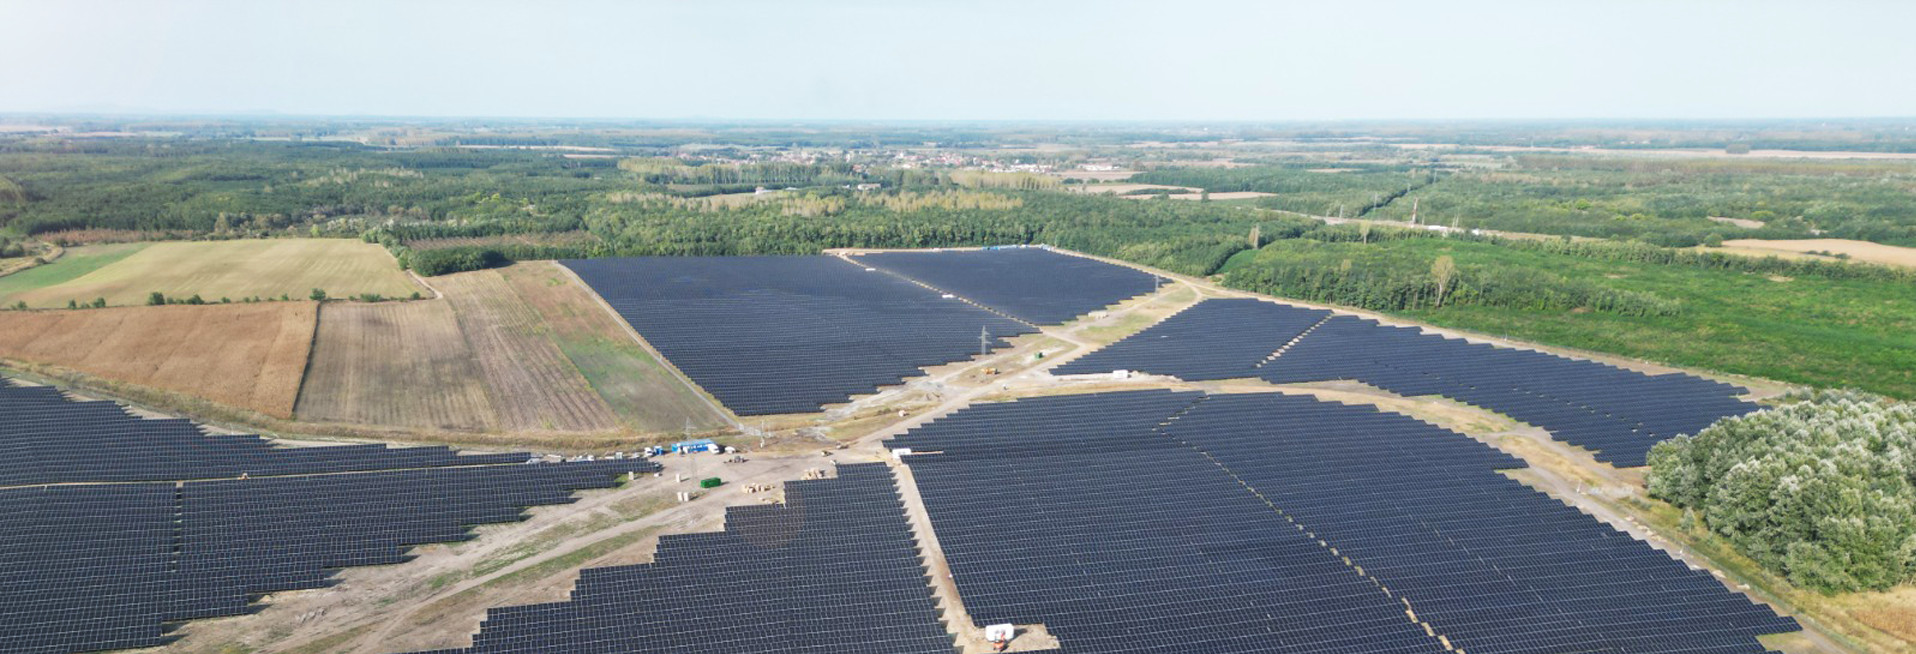 Hungary takes big steps towards renewable energy